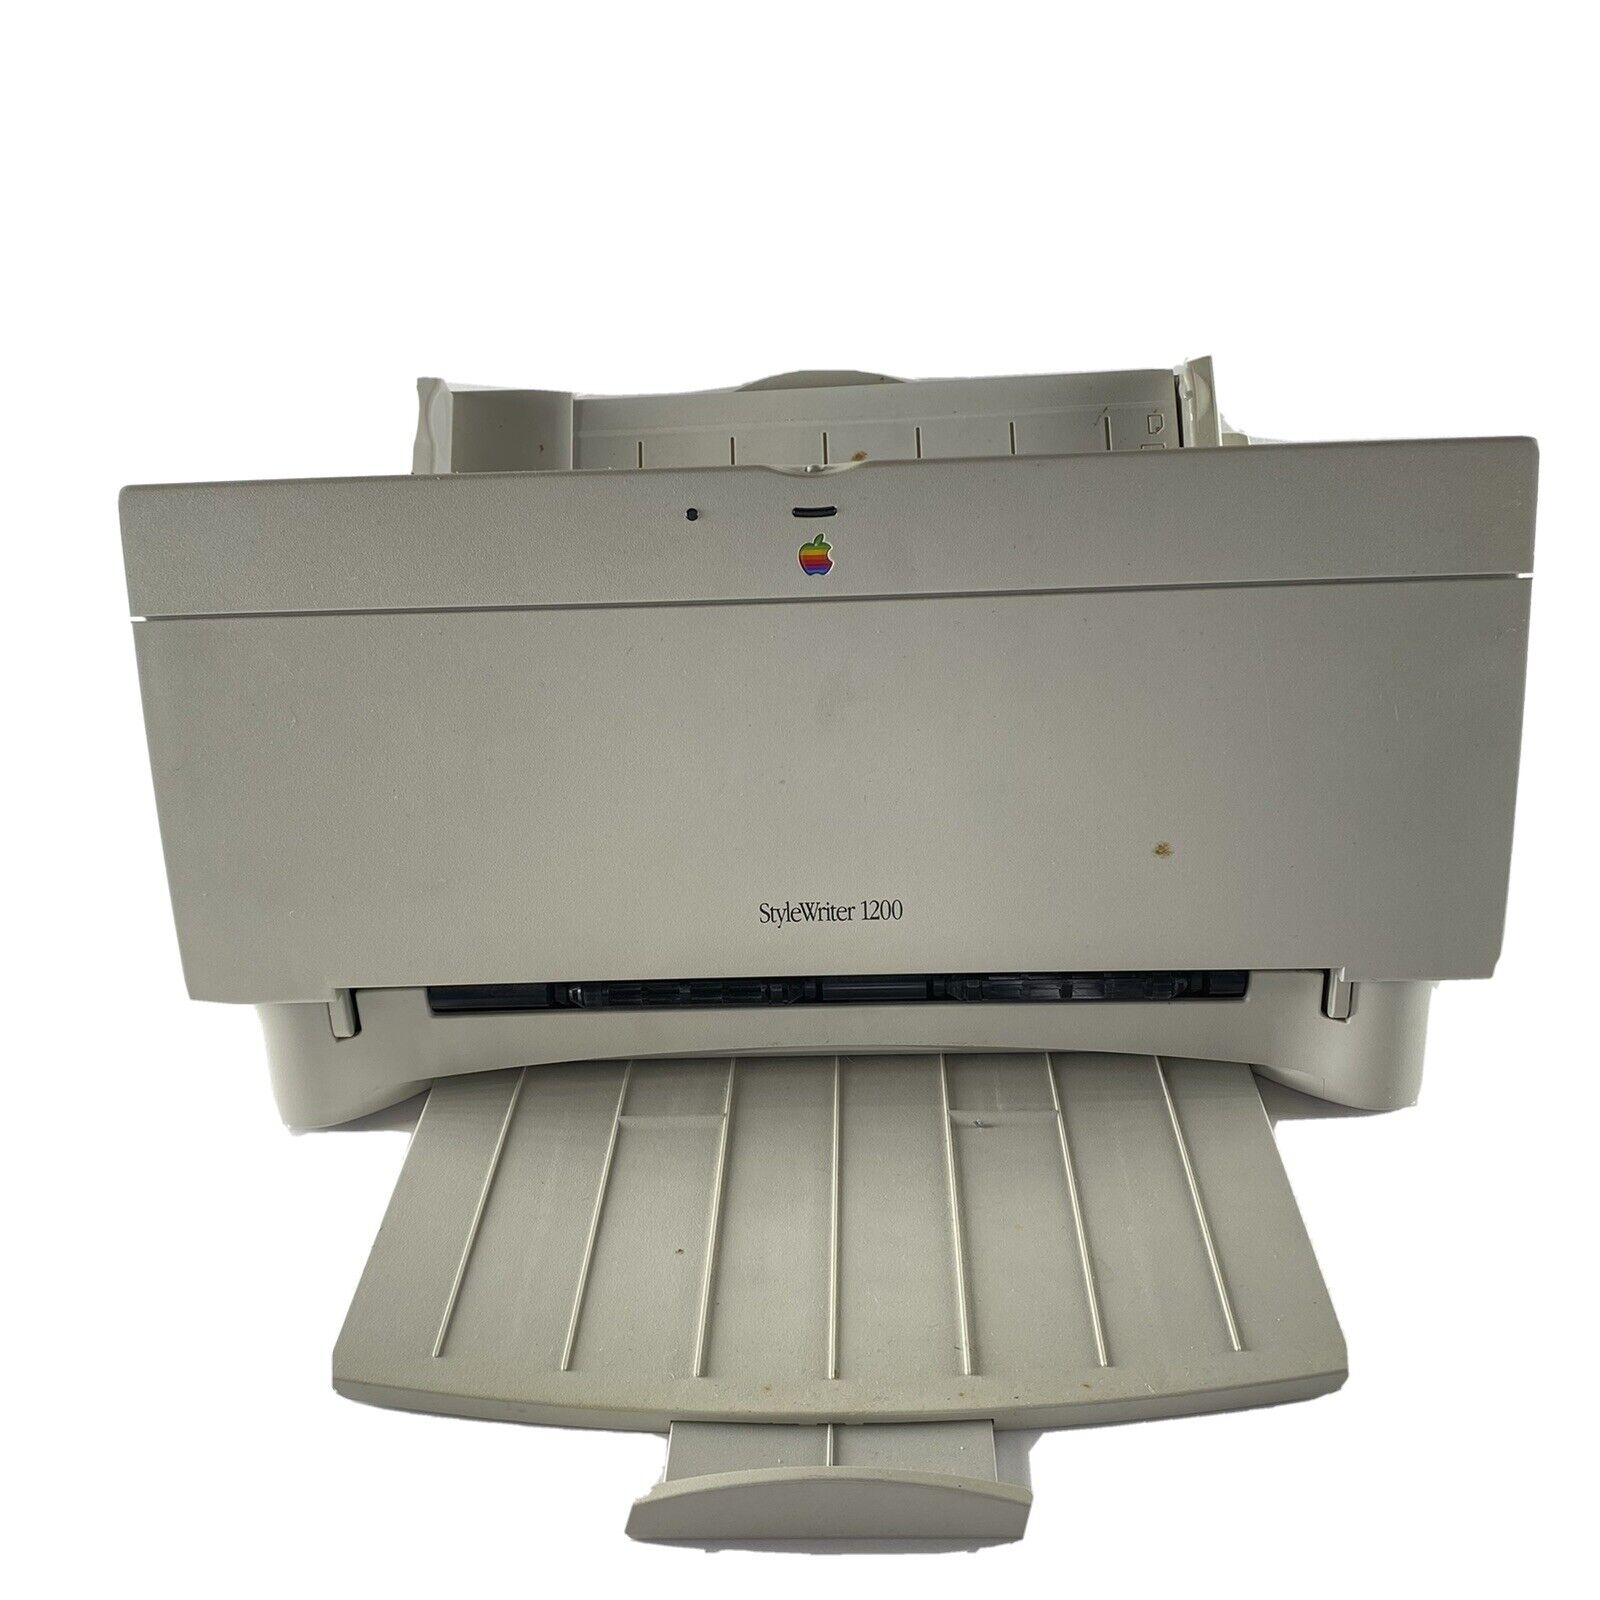 Vintage Apple Macintosh StyleWriter 1200 Printer From 1992